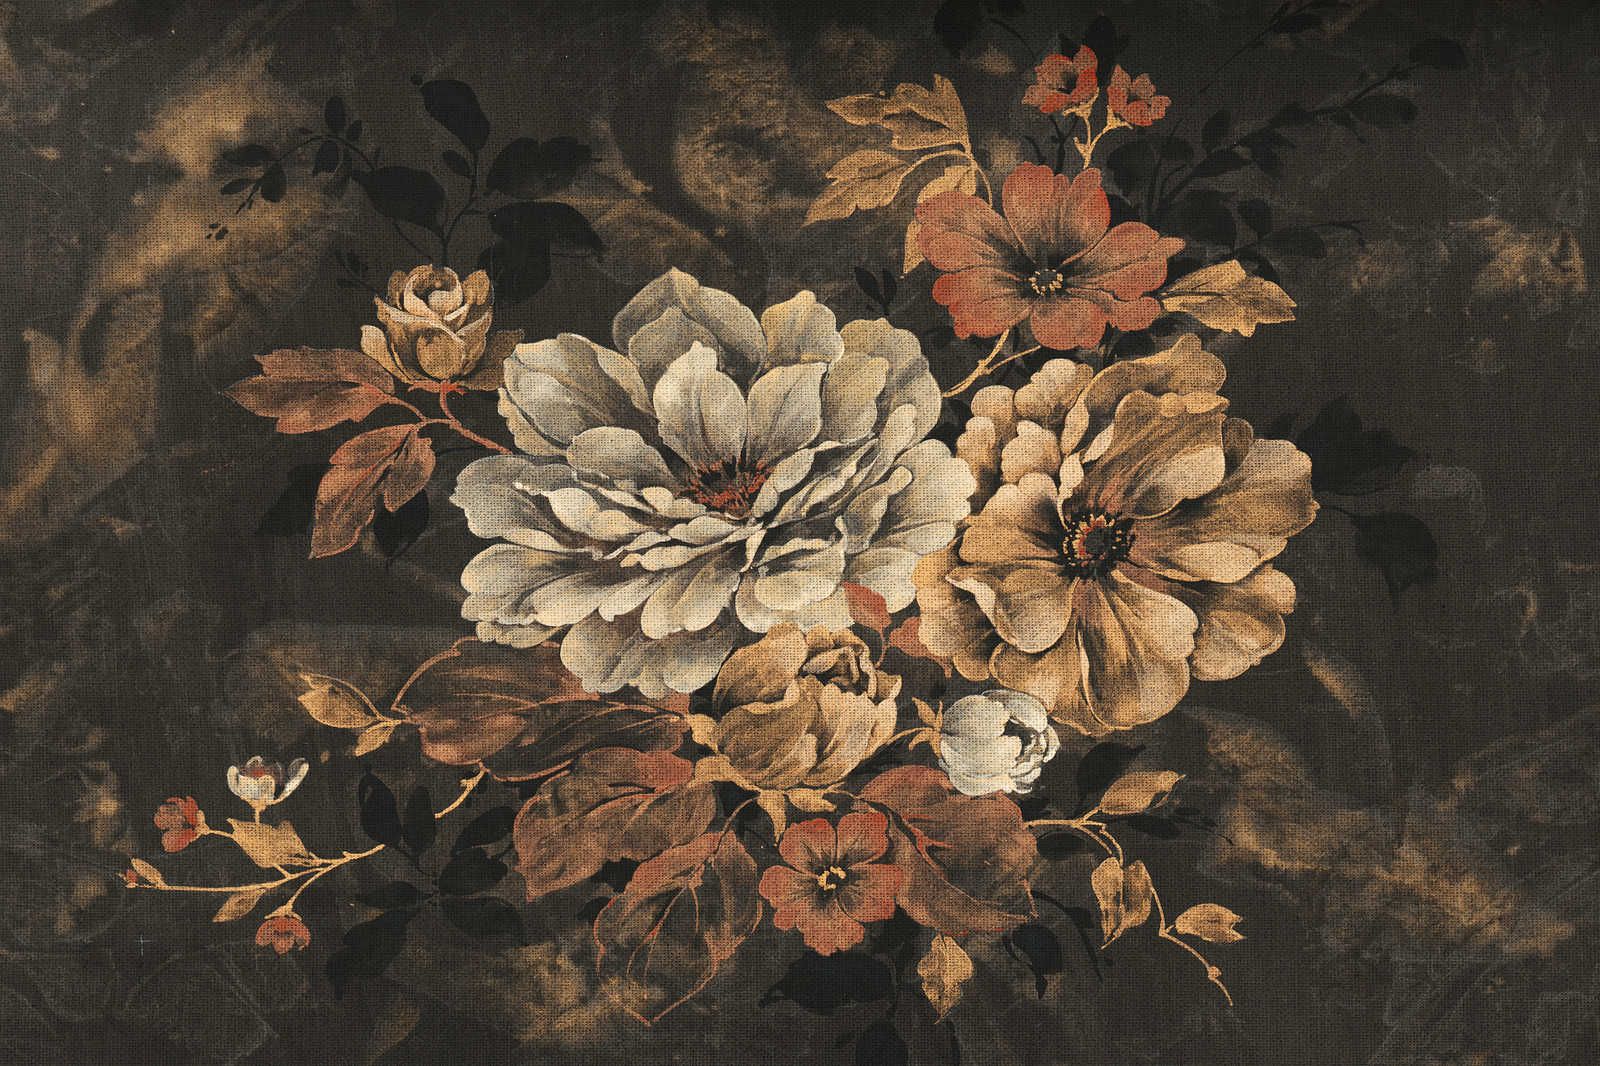             Leinwandbild Blütendesign, Ölgemälde im Vintage Look – 0,90 m x 0,60 m
        